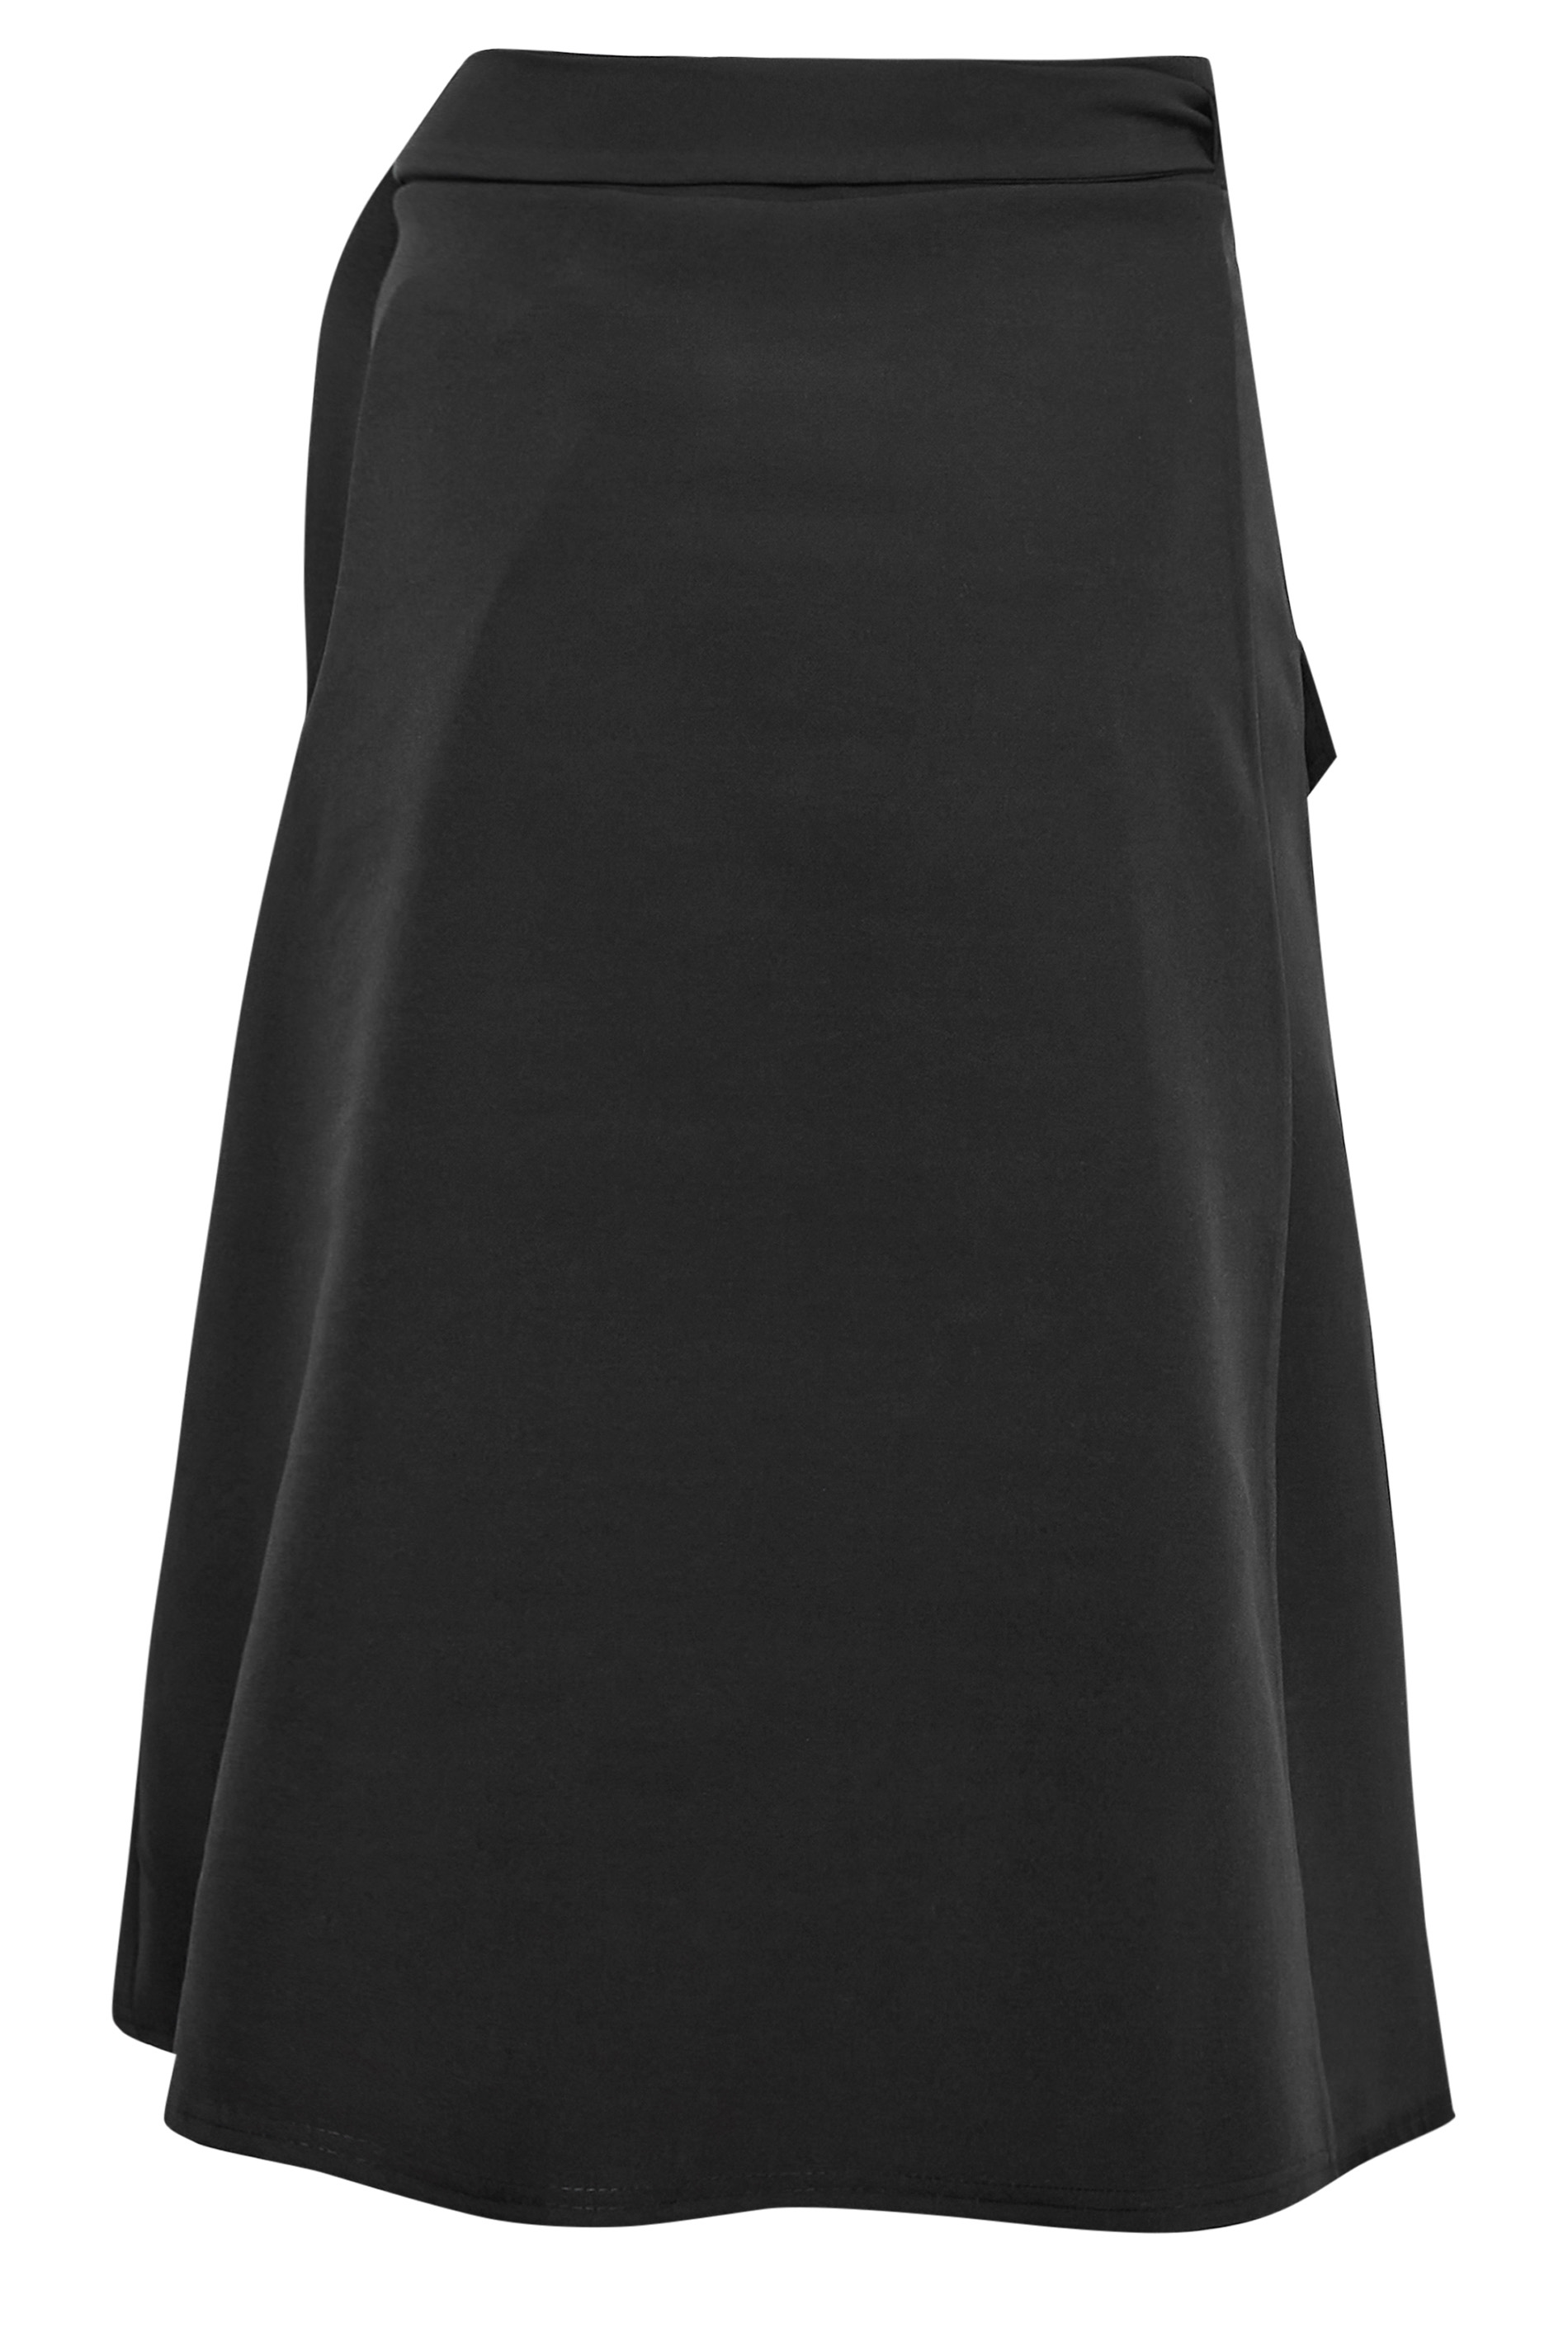 YOURS PETITE Plus Size Black Wrap Cargo Midi Skirt | Yours Clothing 2